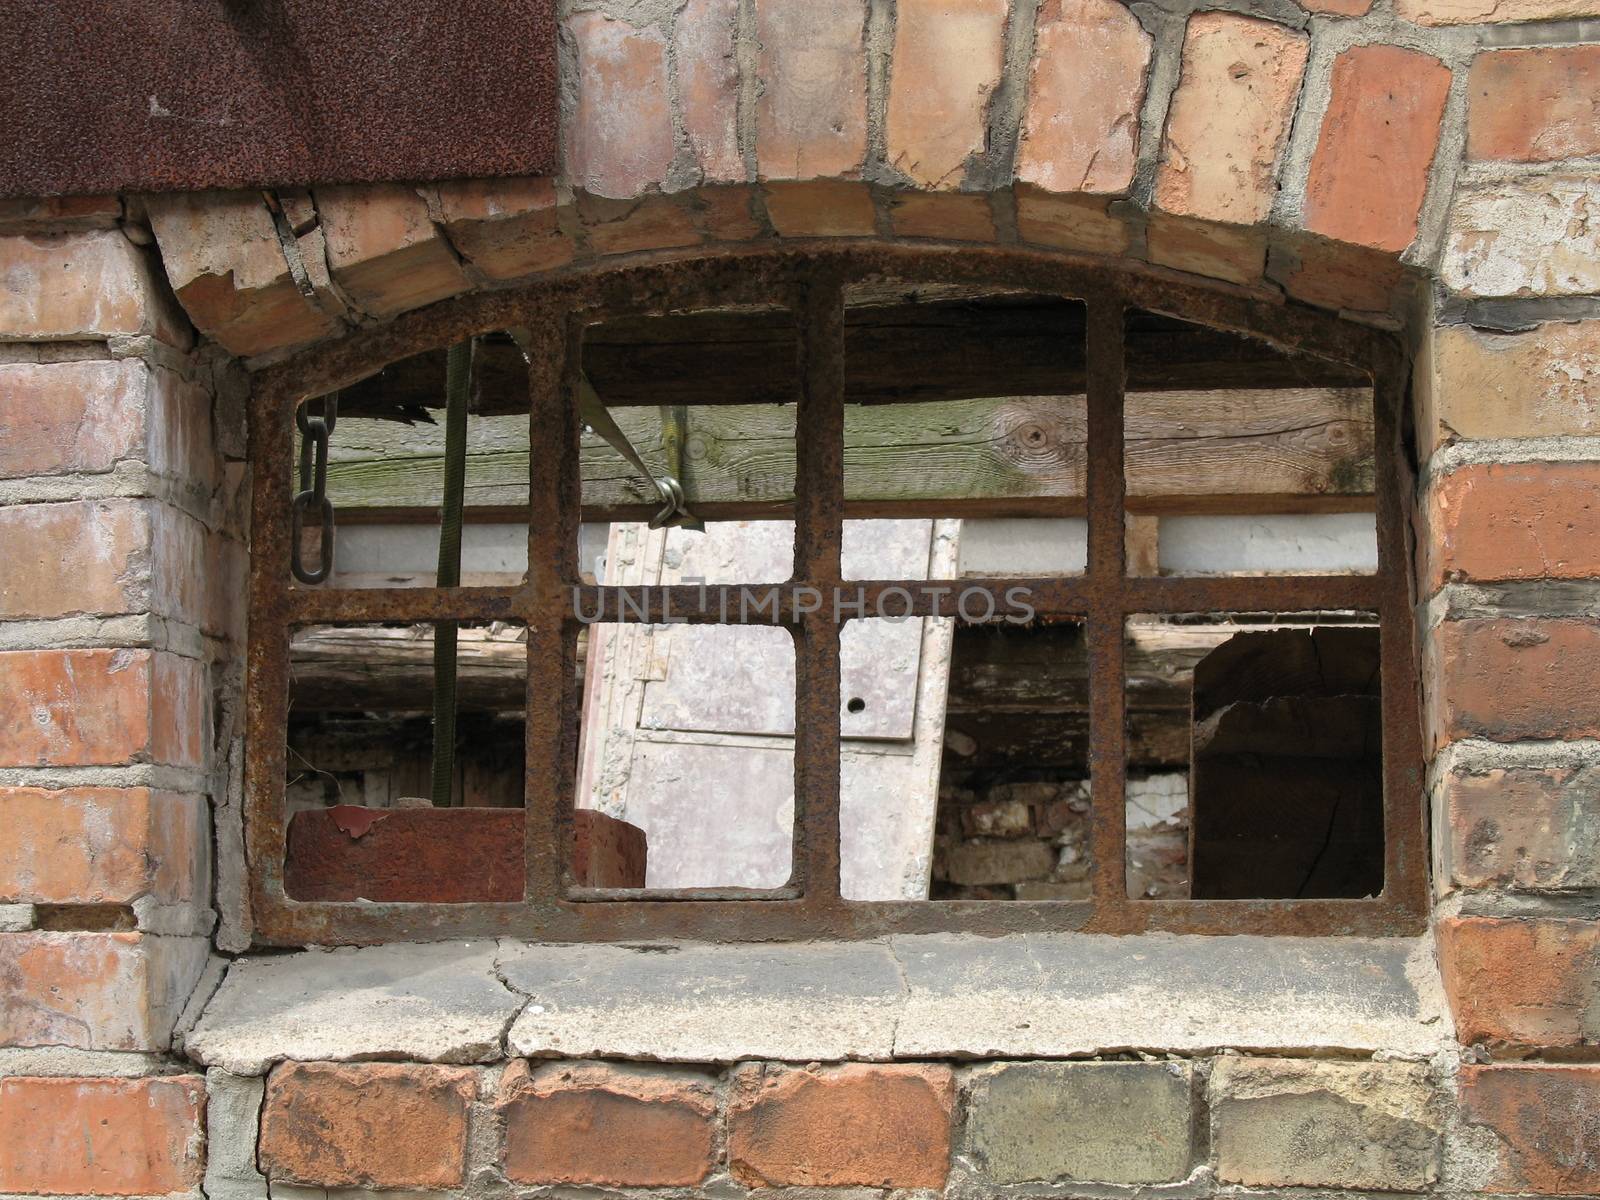 A rusty barred window in an old brick wall.